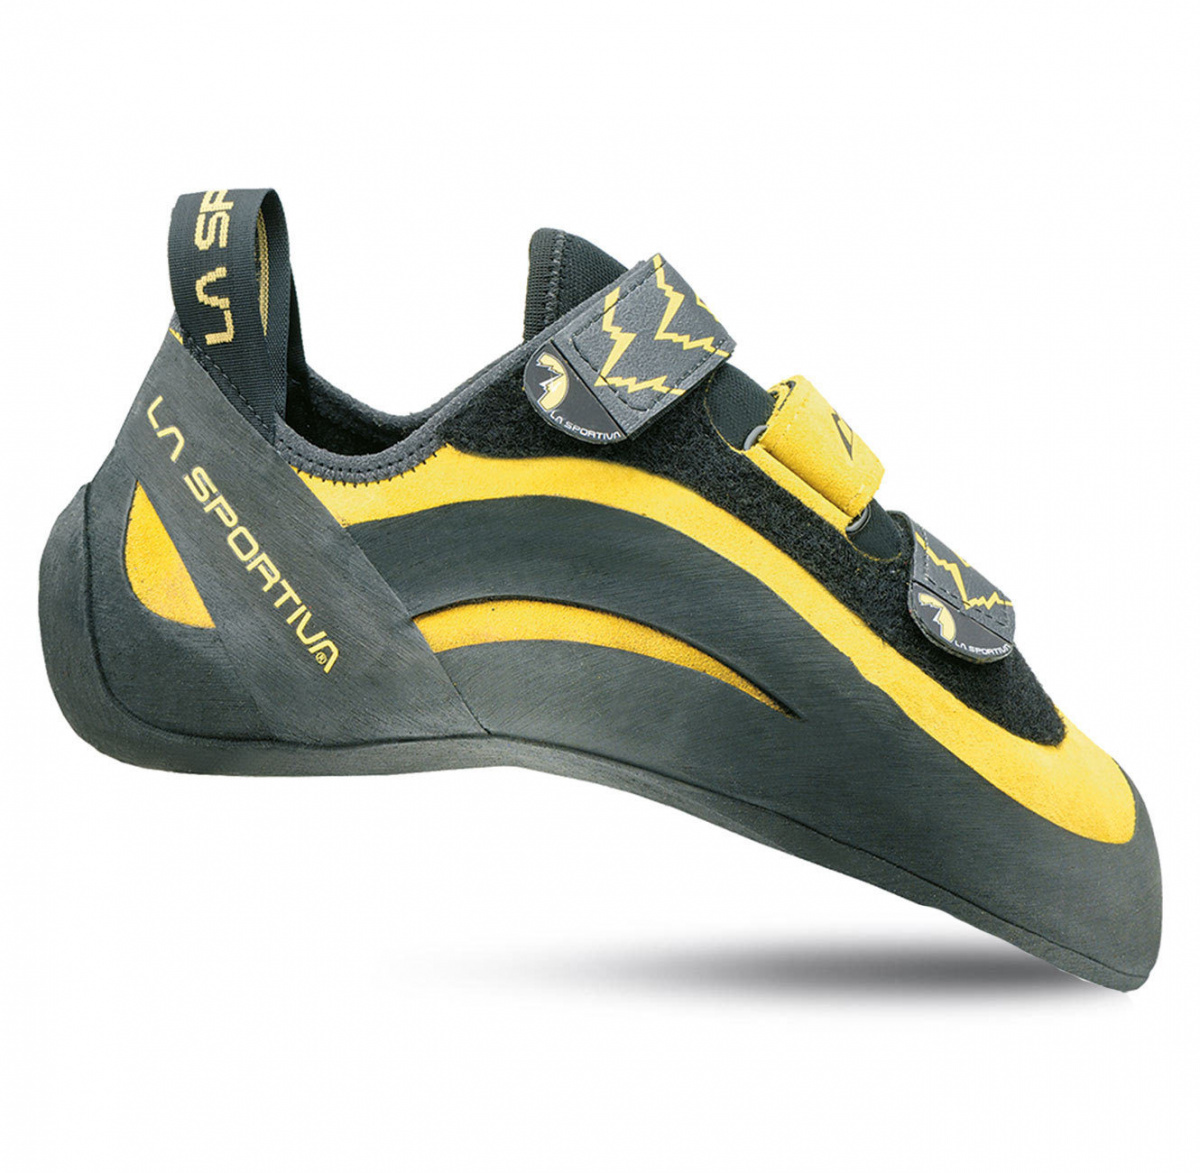 Lezečky La Sportiva Miura VS yellow/black 39,5 EU